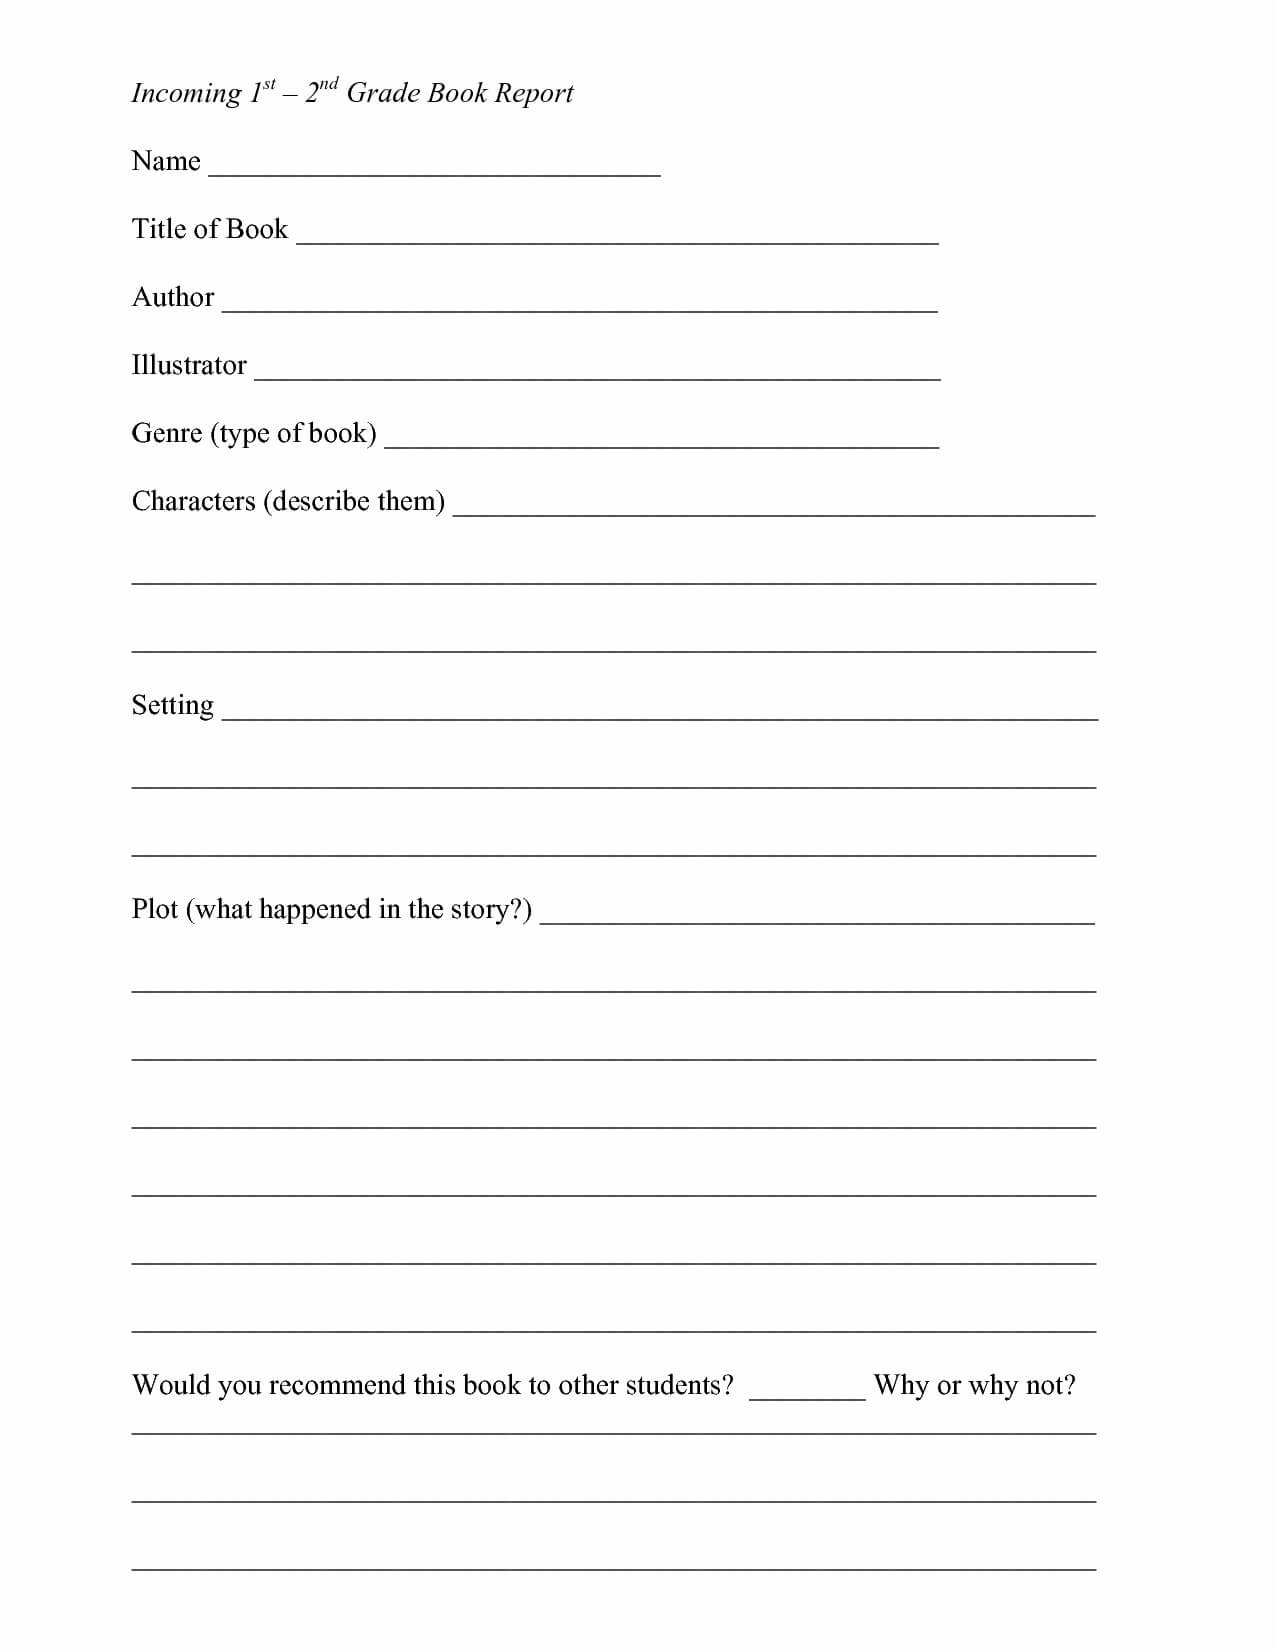 10+ Book Report Templates | 2Phost Regarding 1St Grade Book Report Template